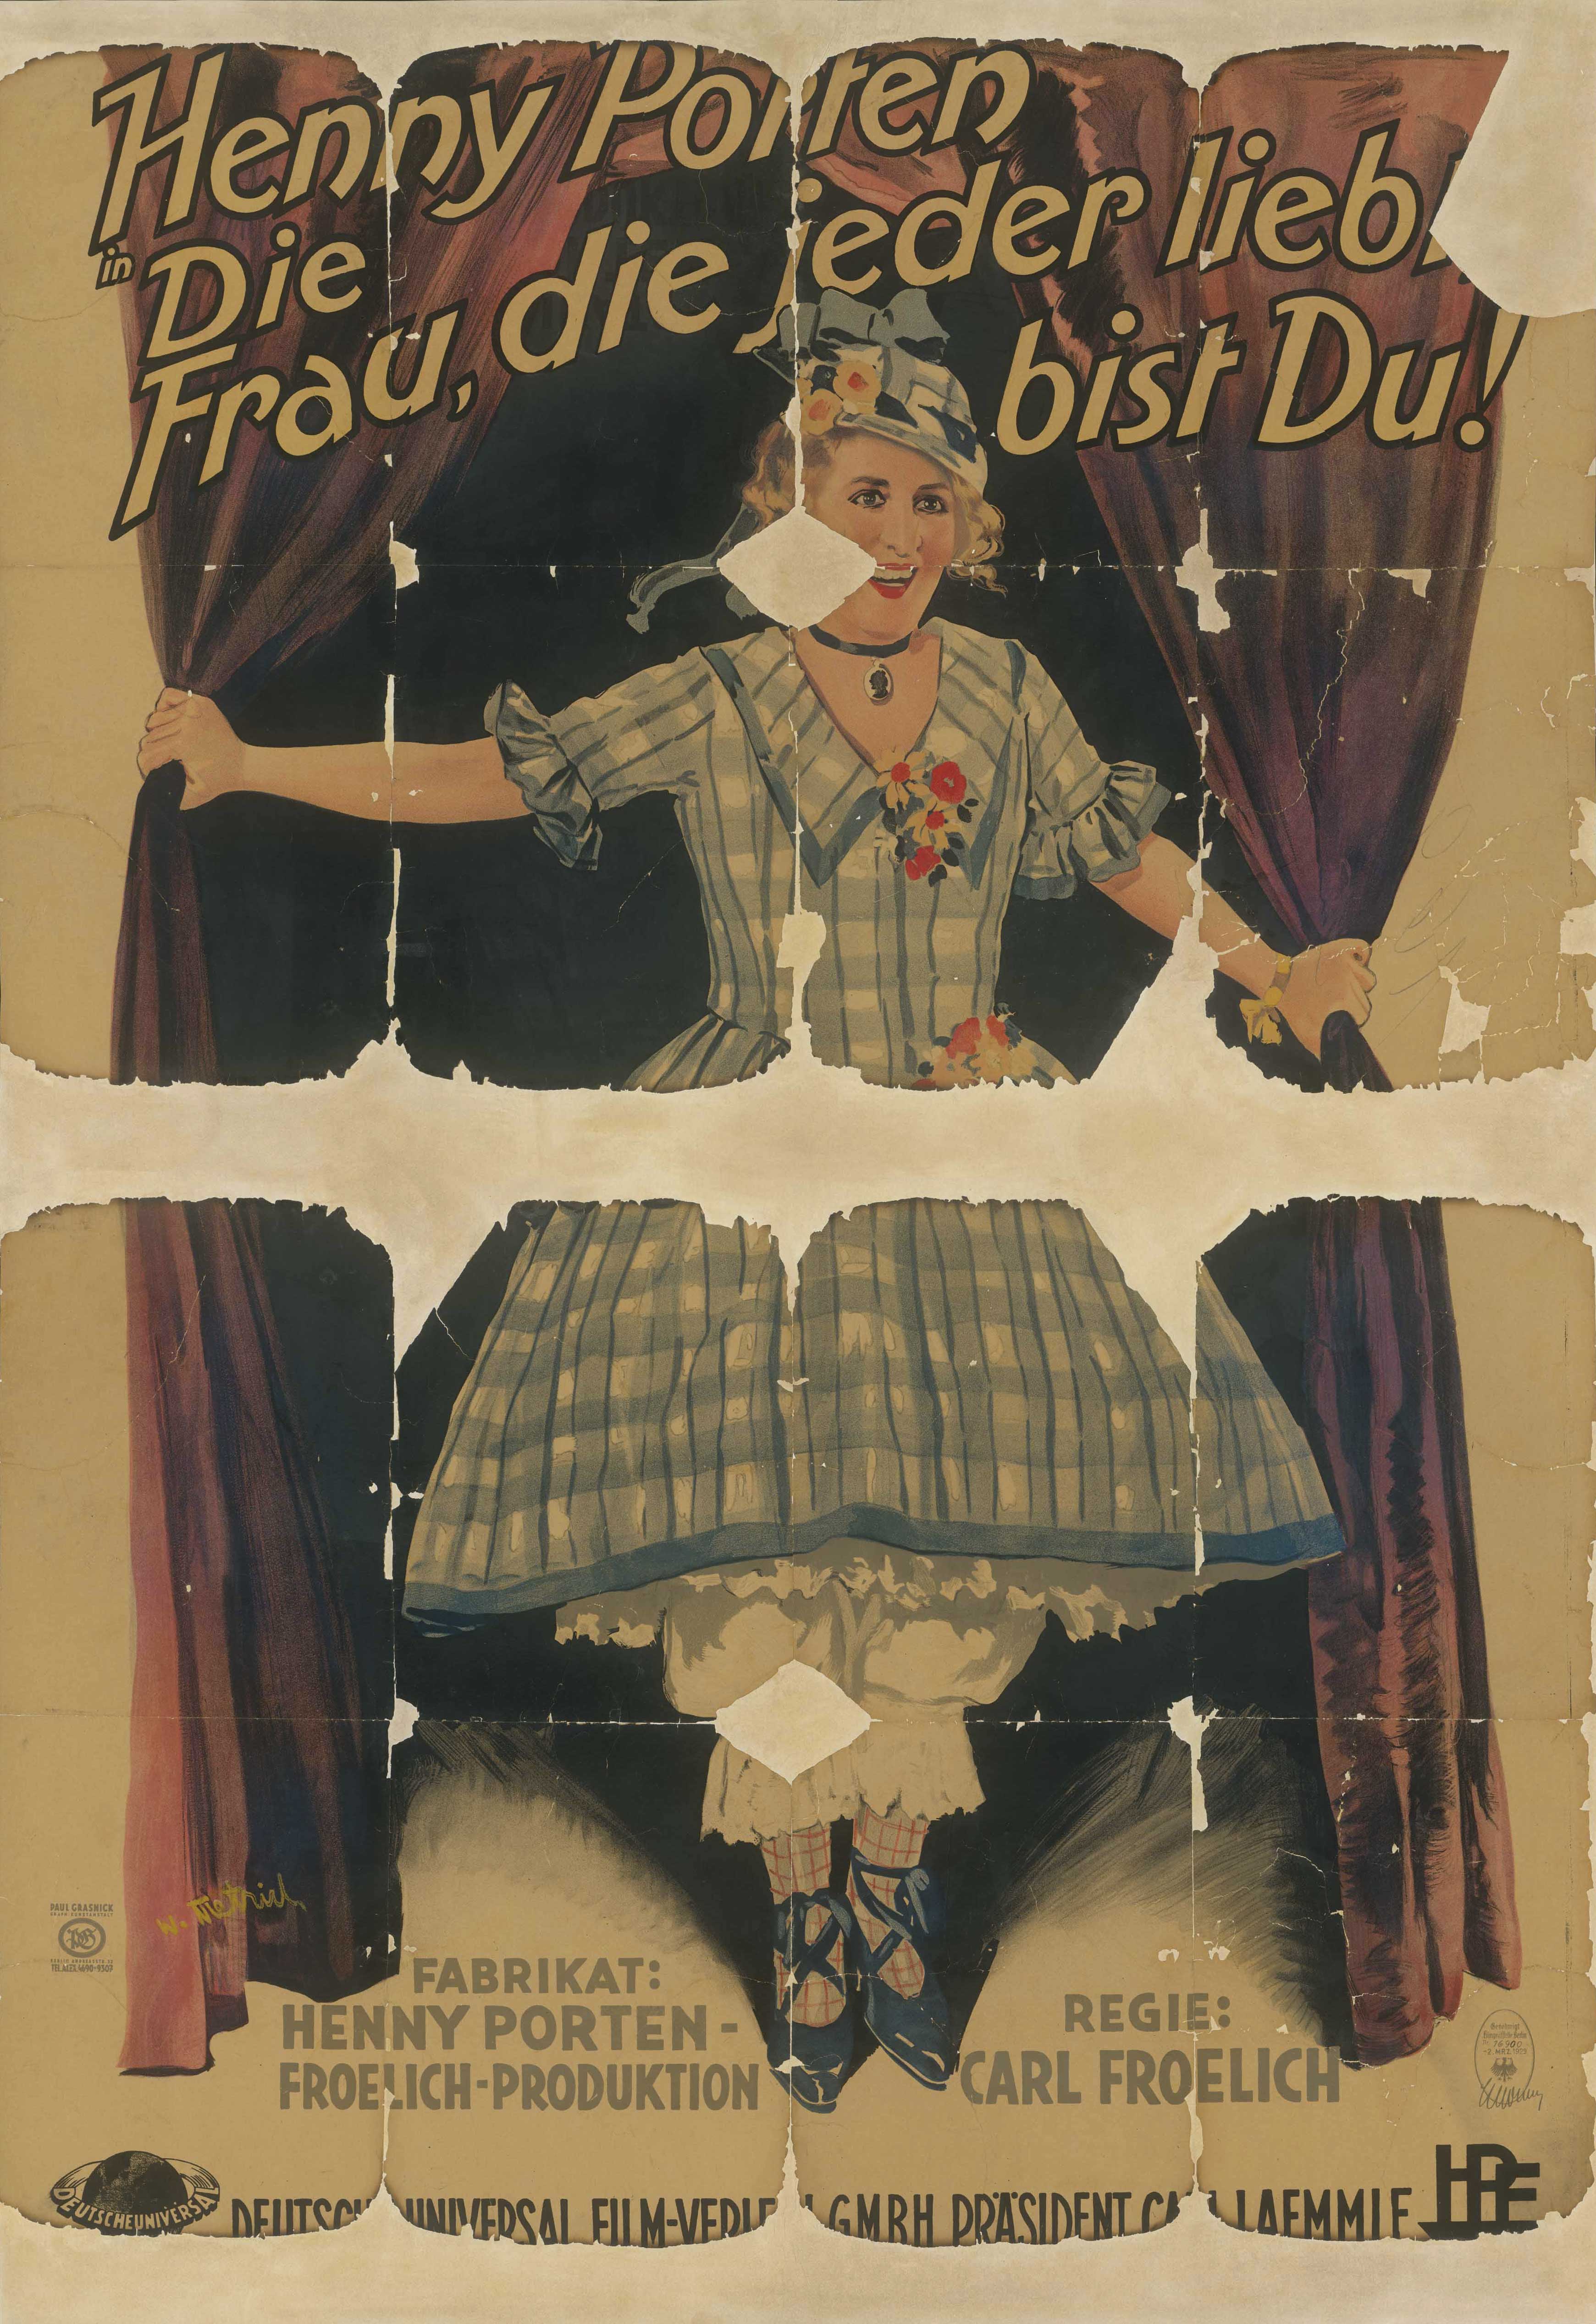 Film poster for Die Frau, die jeder liebt, bist Du, Germany 1928/1929)